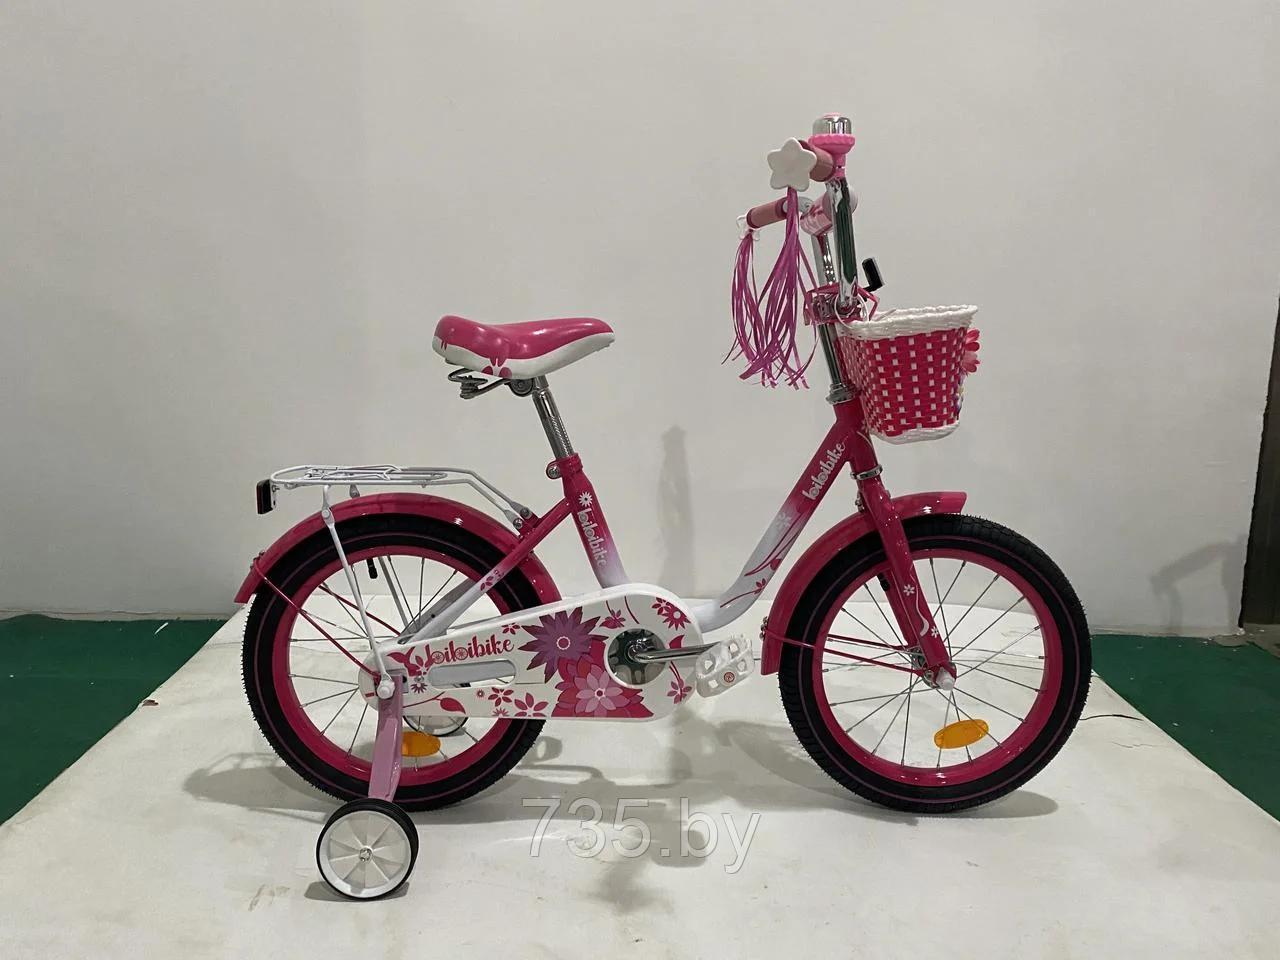 Детский велосипед Bibibike 16" для девочек, корзина, звонок, багажник, мишура